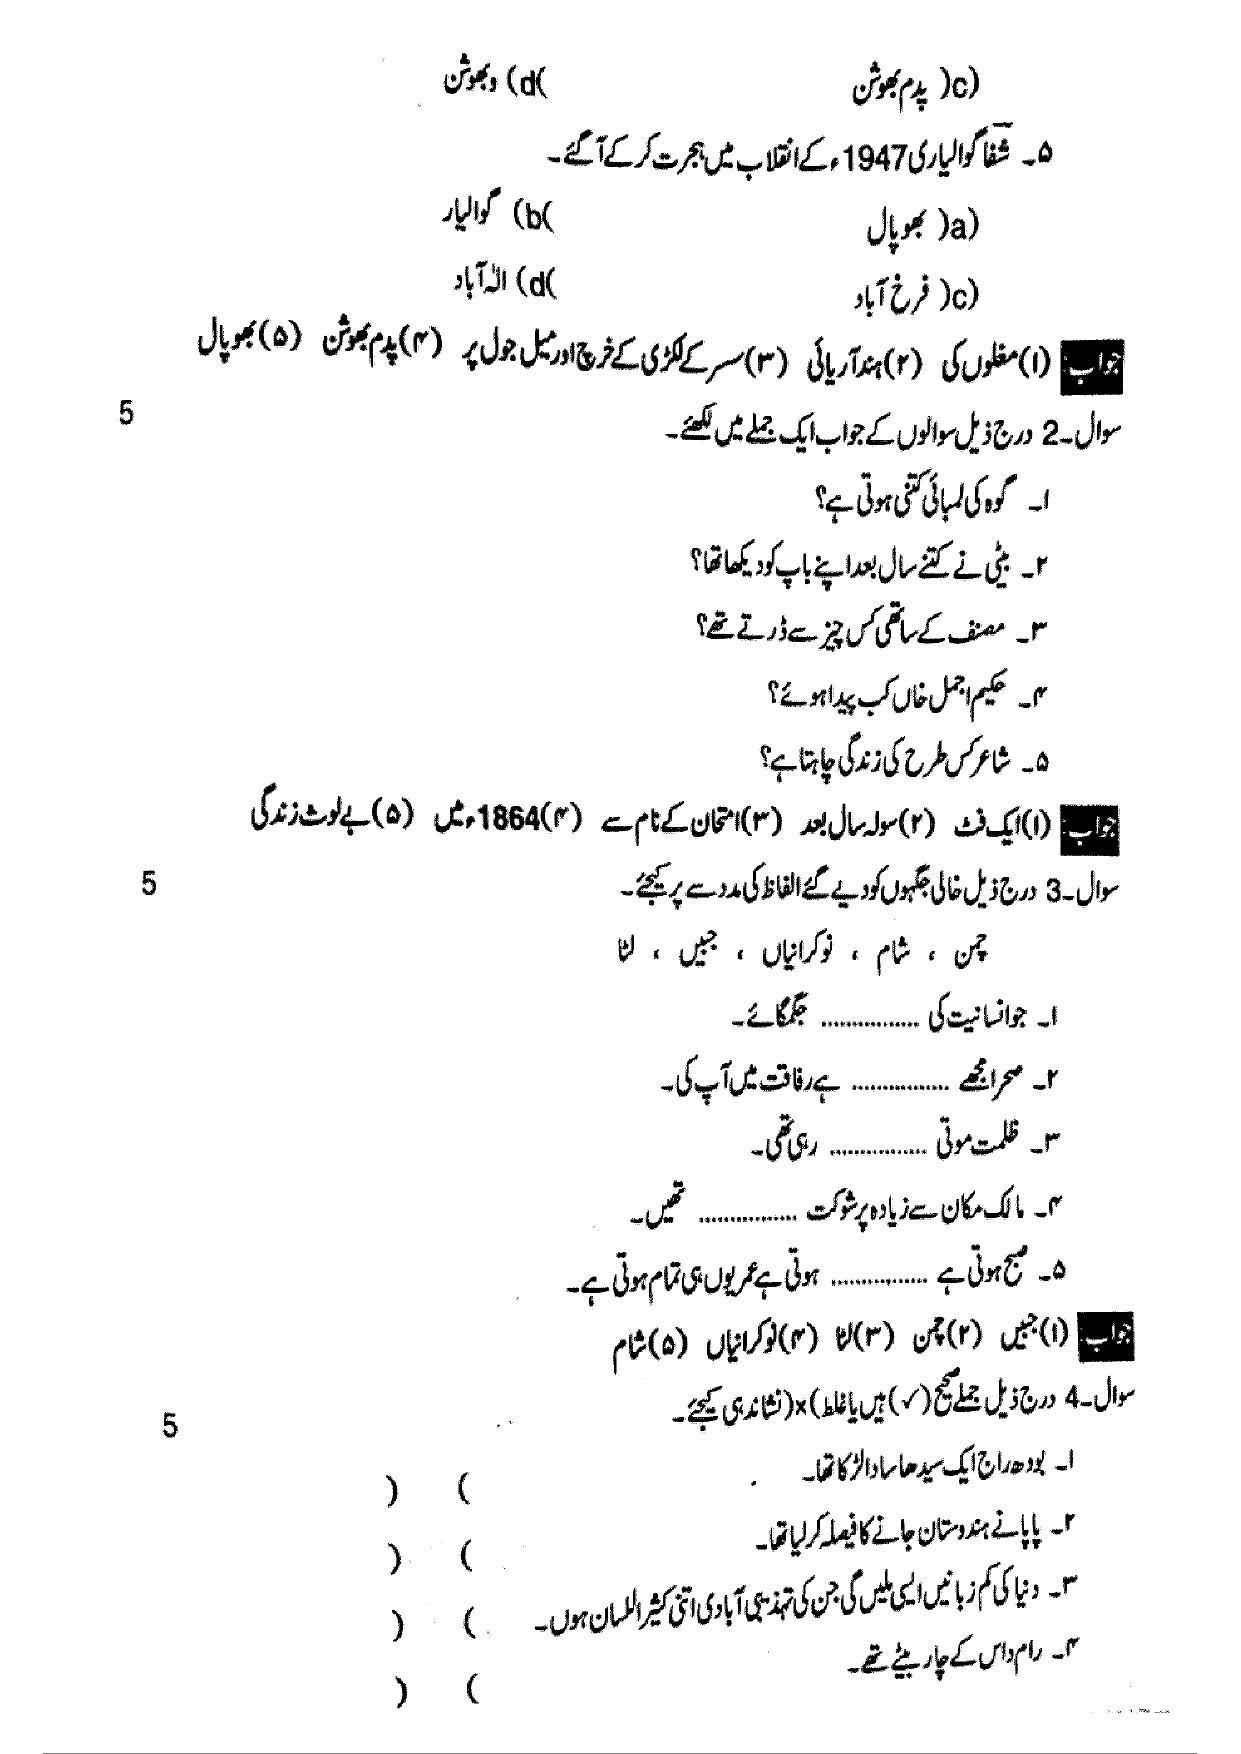 MP Board Class 12 Urdu 2019 Question Paper - Page 2